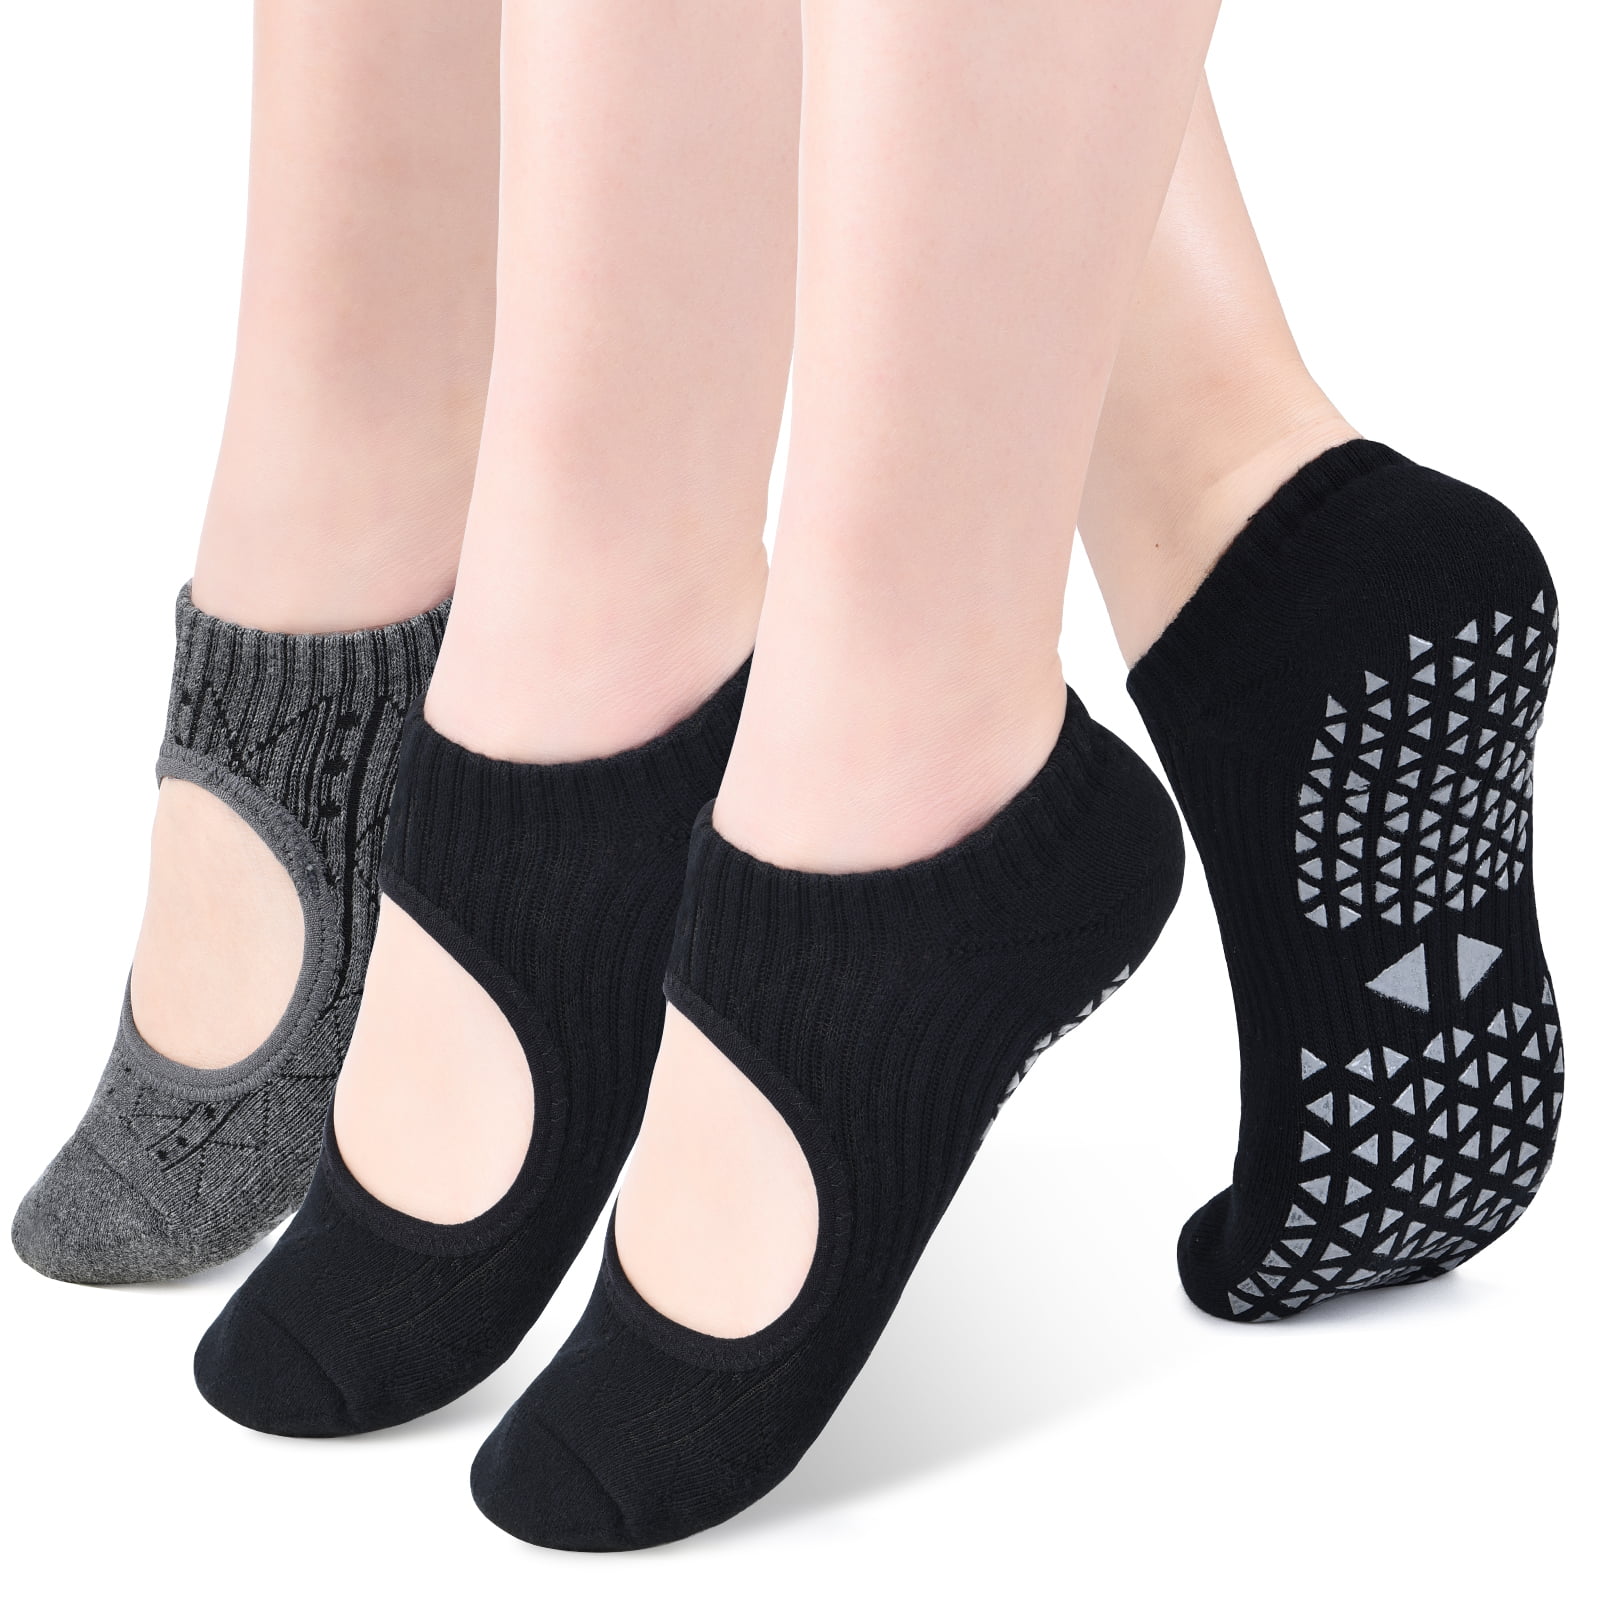 UK Size UK 3-5 Yoga Pilates  Fitness Gym Grip Black Non Slip Yoga Socks 